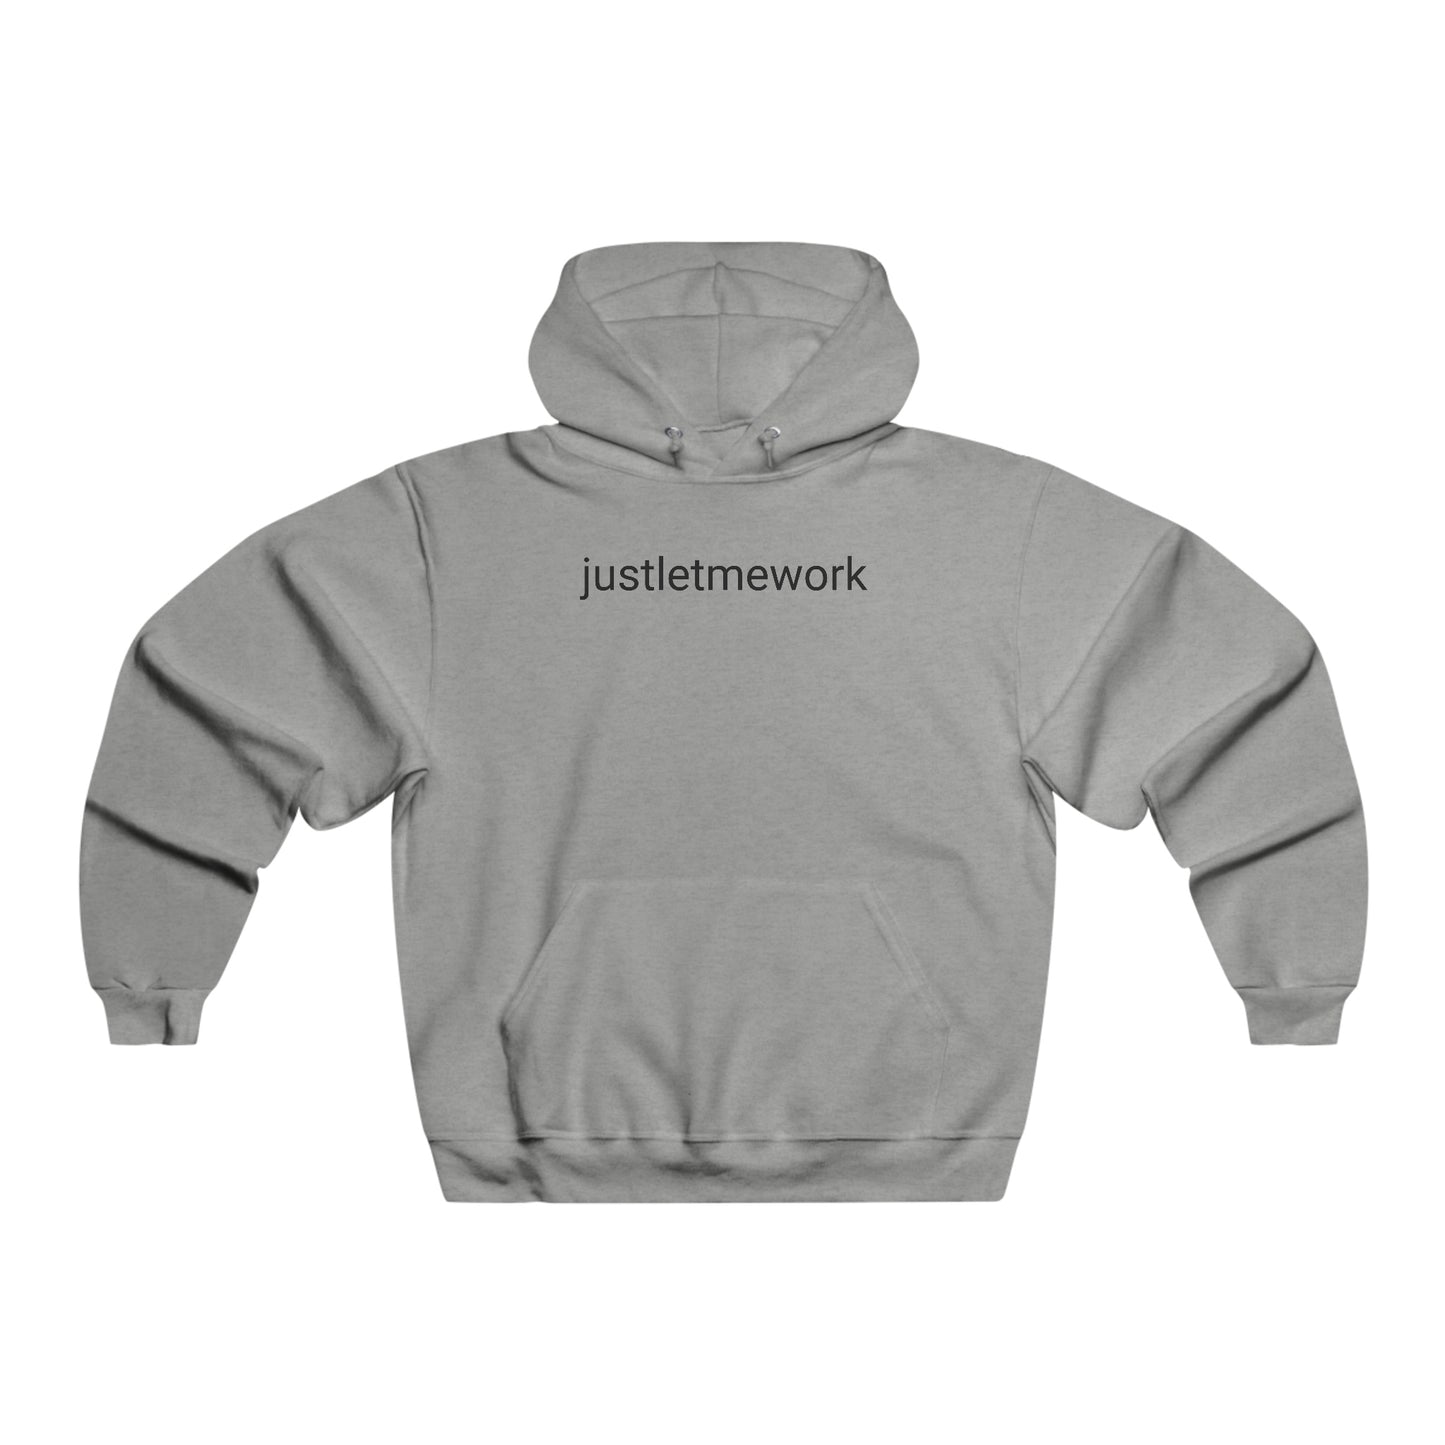 justletmework Unisex Hooded Sweatshirt